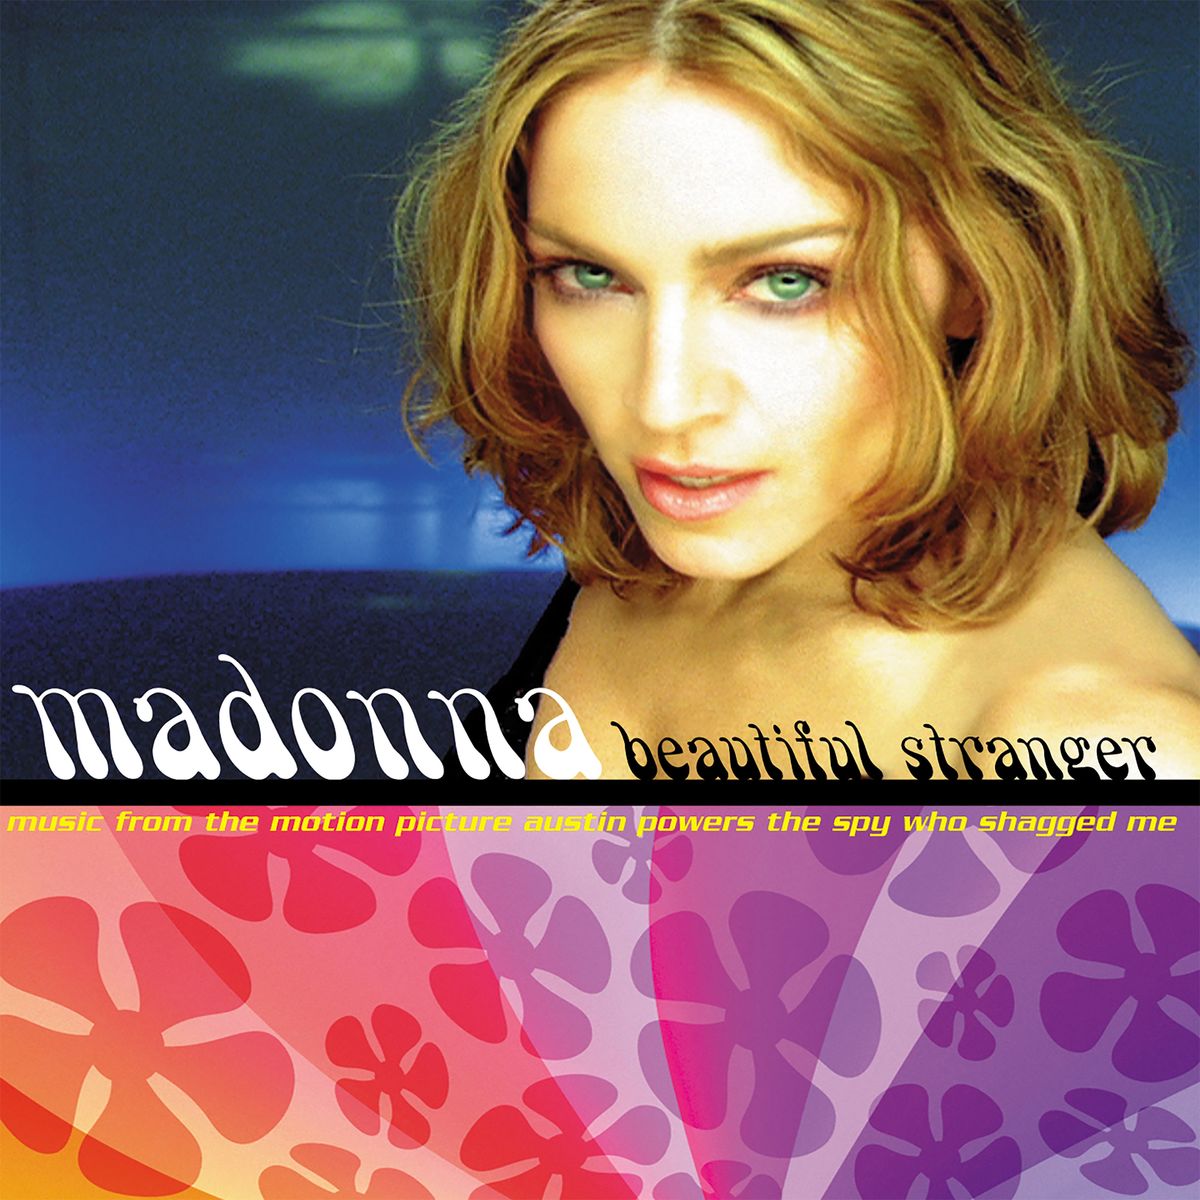 Madonna filmography - Wikipedia